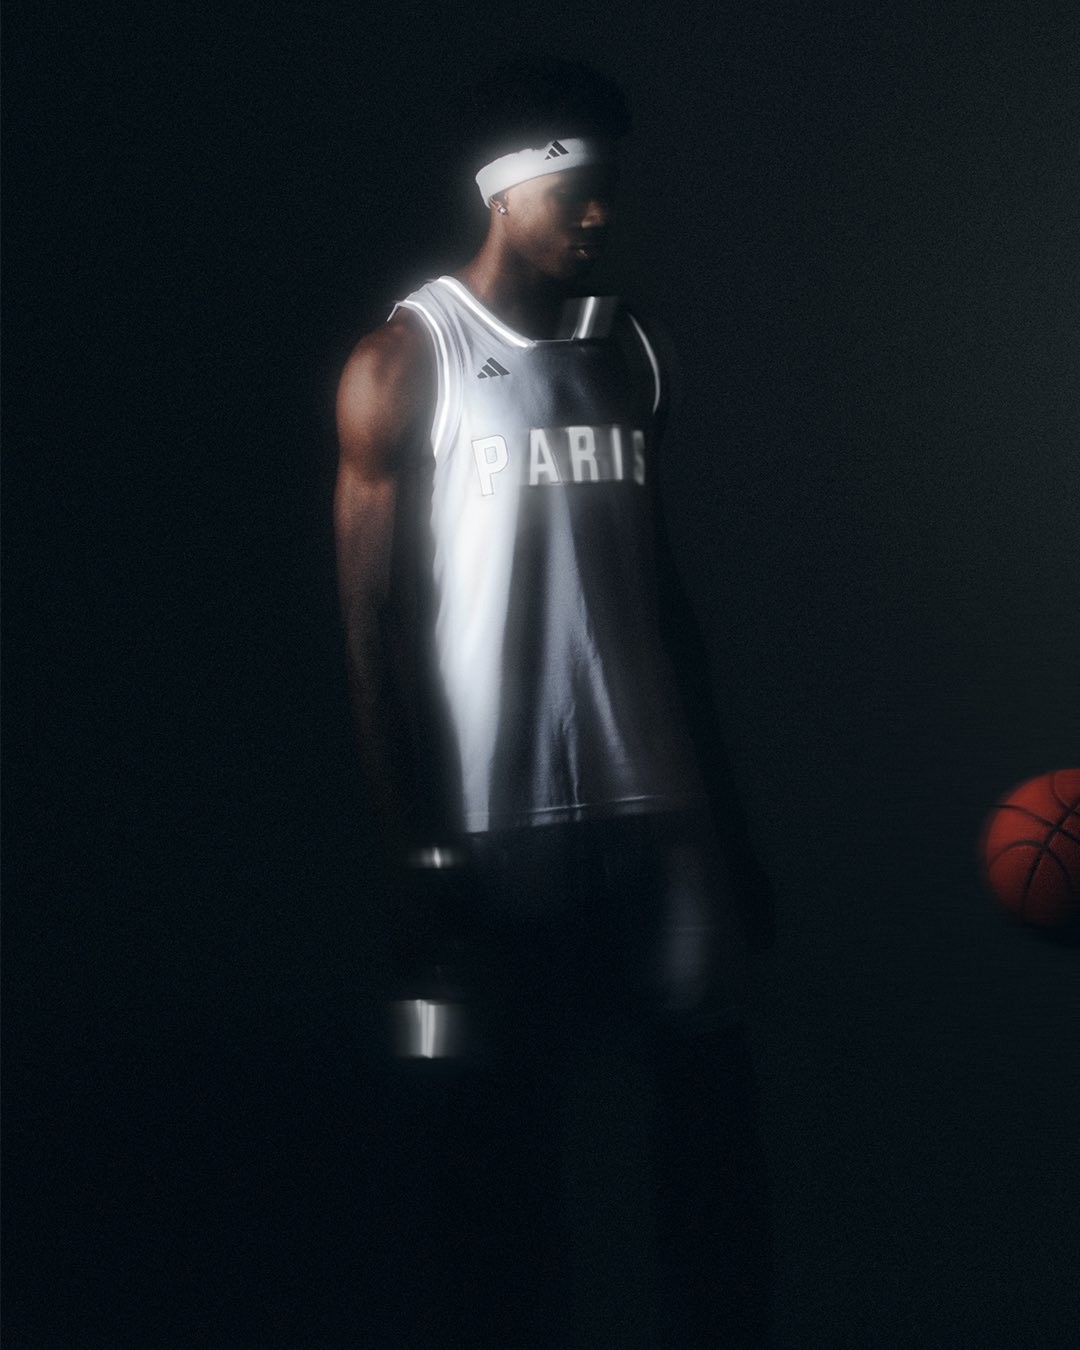 NO-NAME PARIS — Goyard Inspired Basketball Jersey - Black.